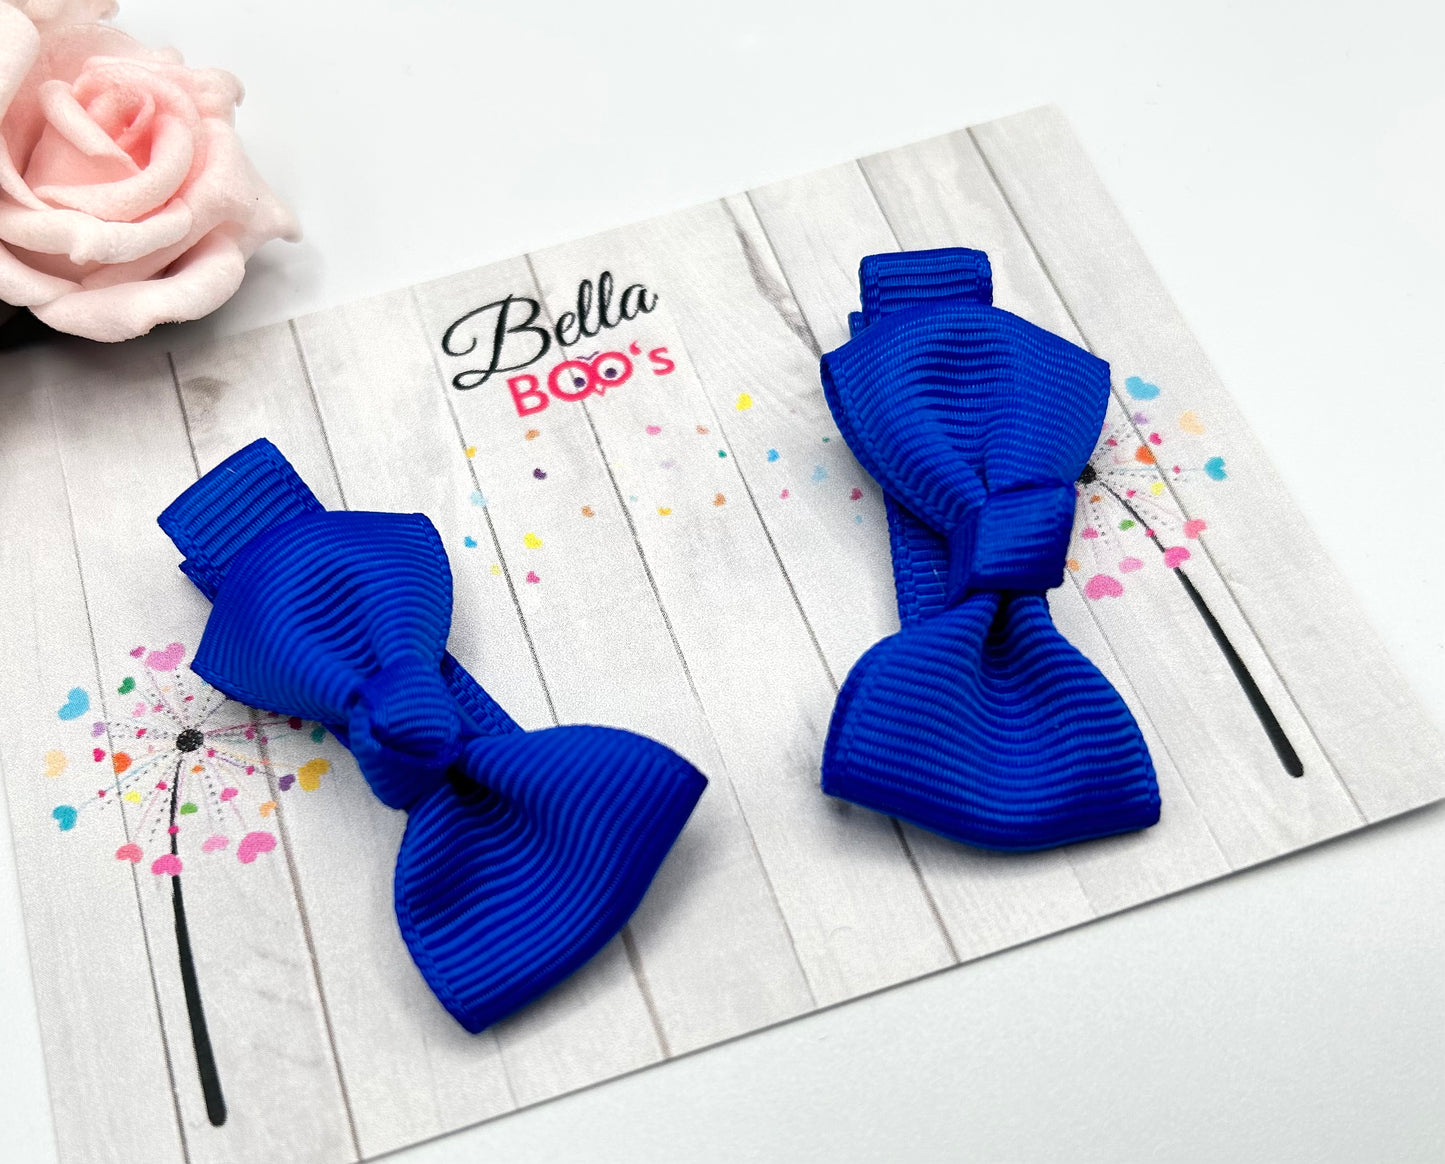 Load image into Gallery viewer, Ribbon Hair Bow Set - Royal Blue
